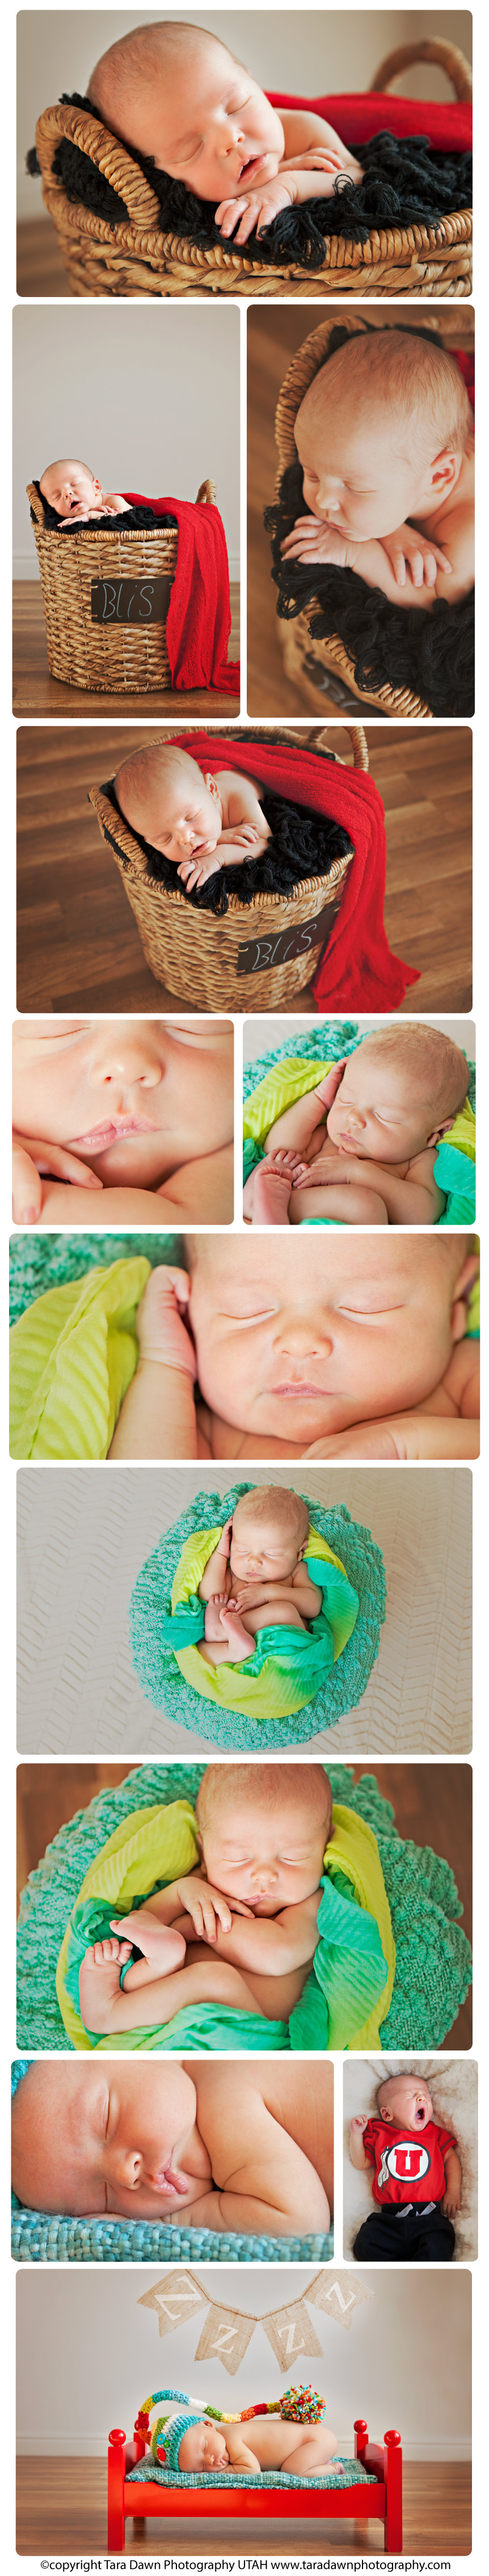 utah_newborn_photographer_infant_boy